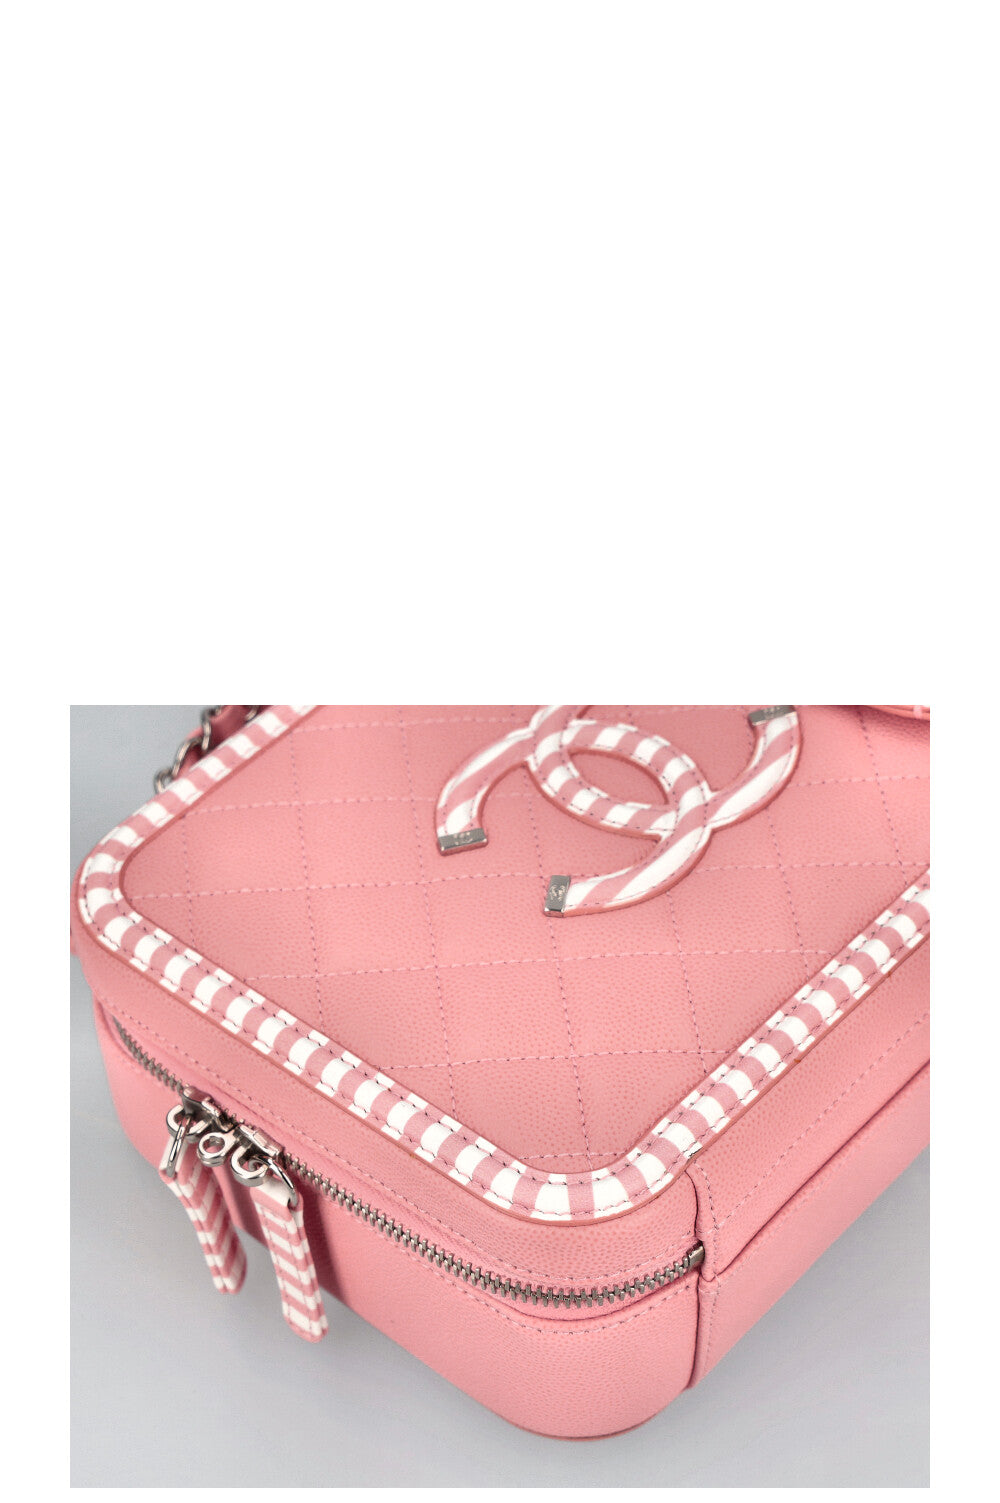 CHANEL 2018 Filigree Vanity Top Handle Bag Pink